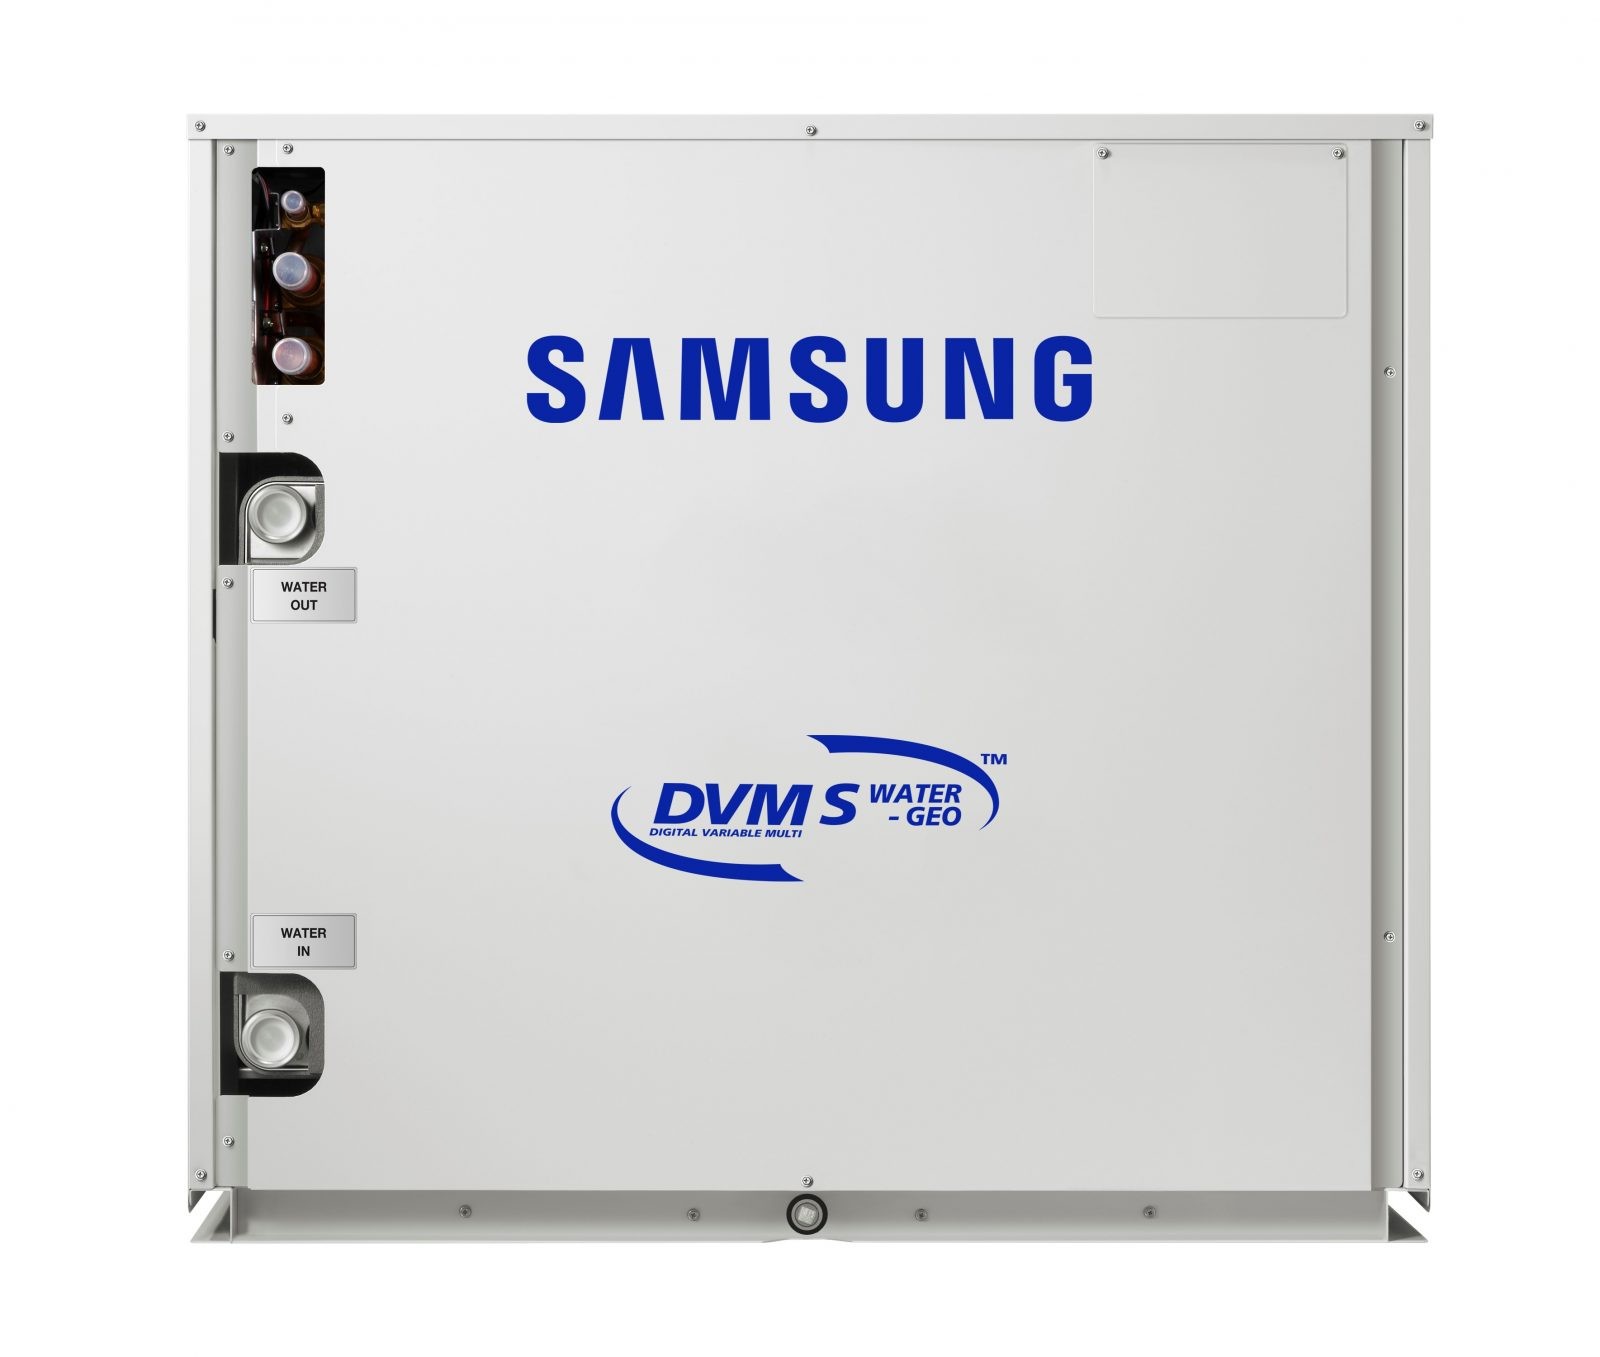 Външно тяло Samsung DVM S Water AM500MXWANR